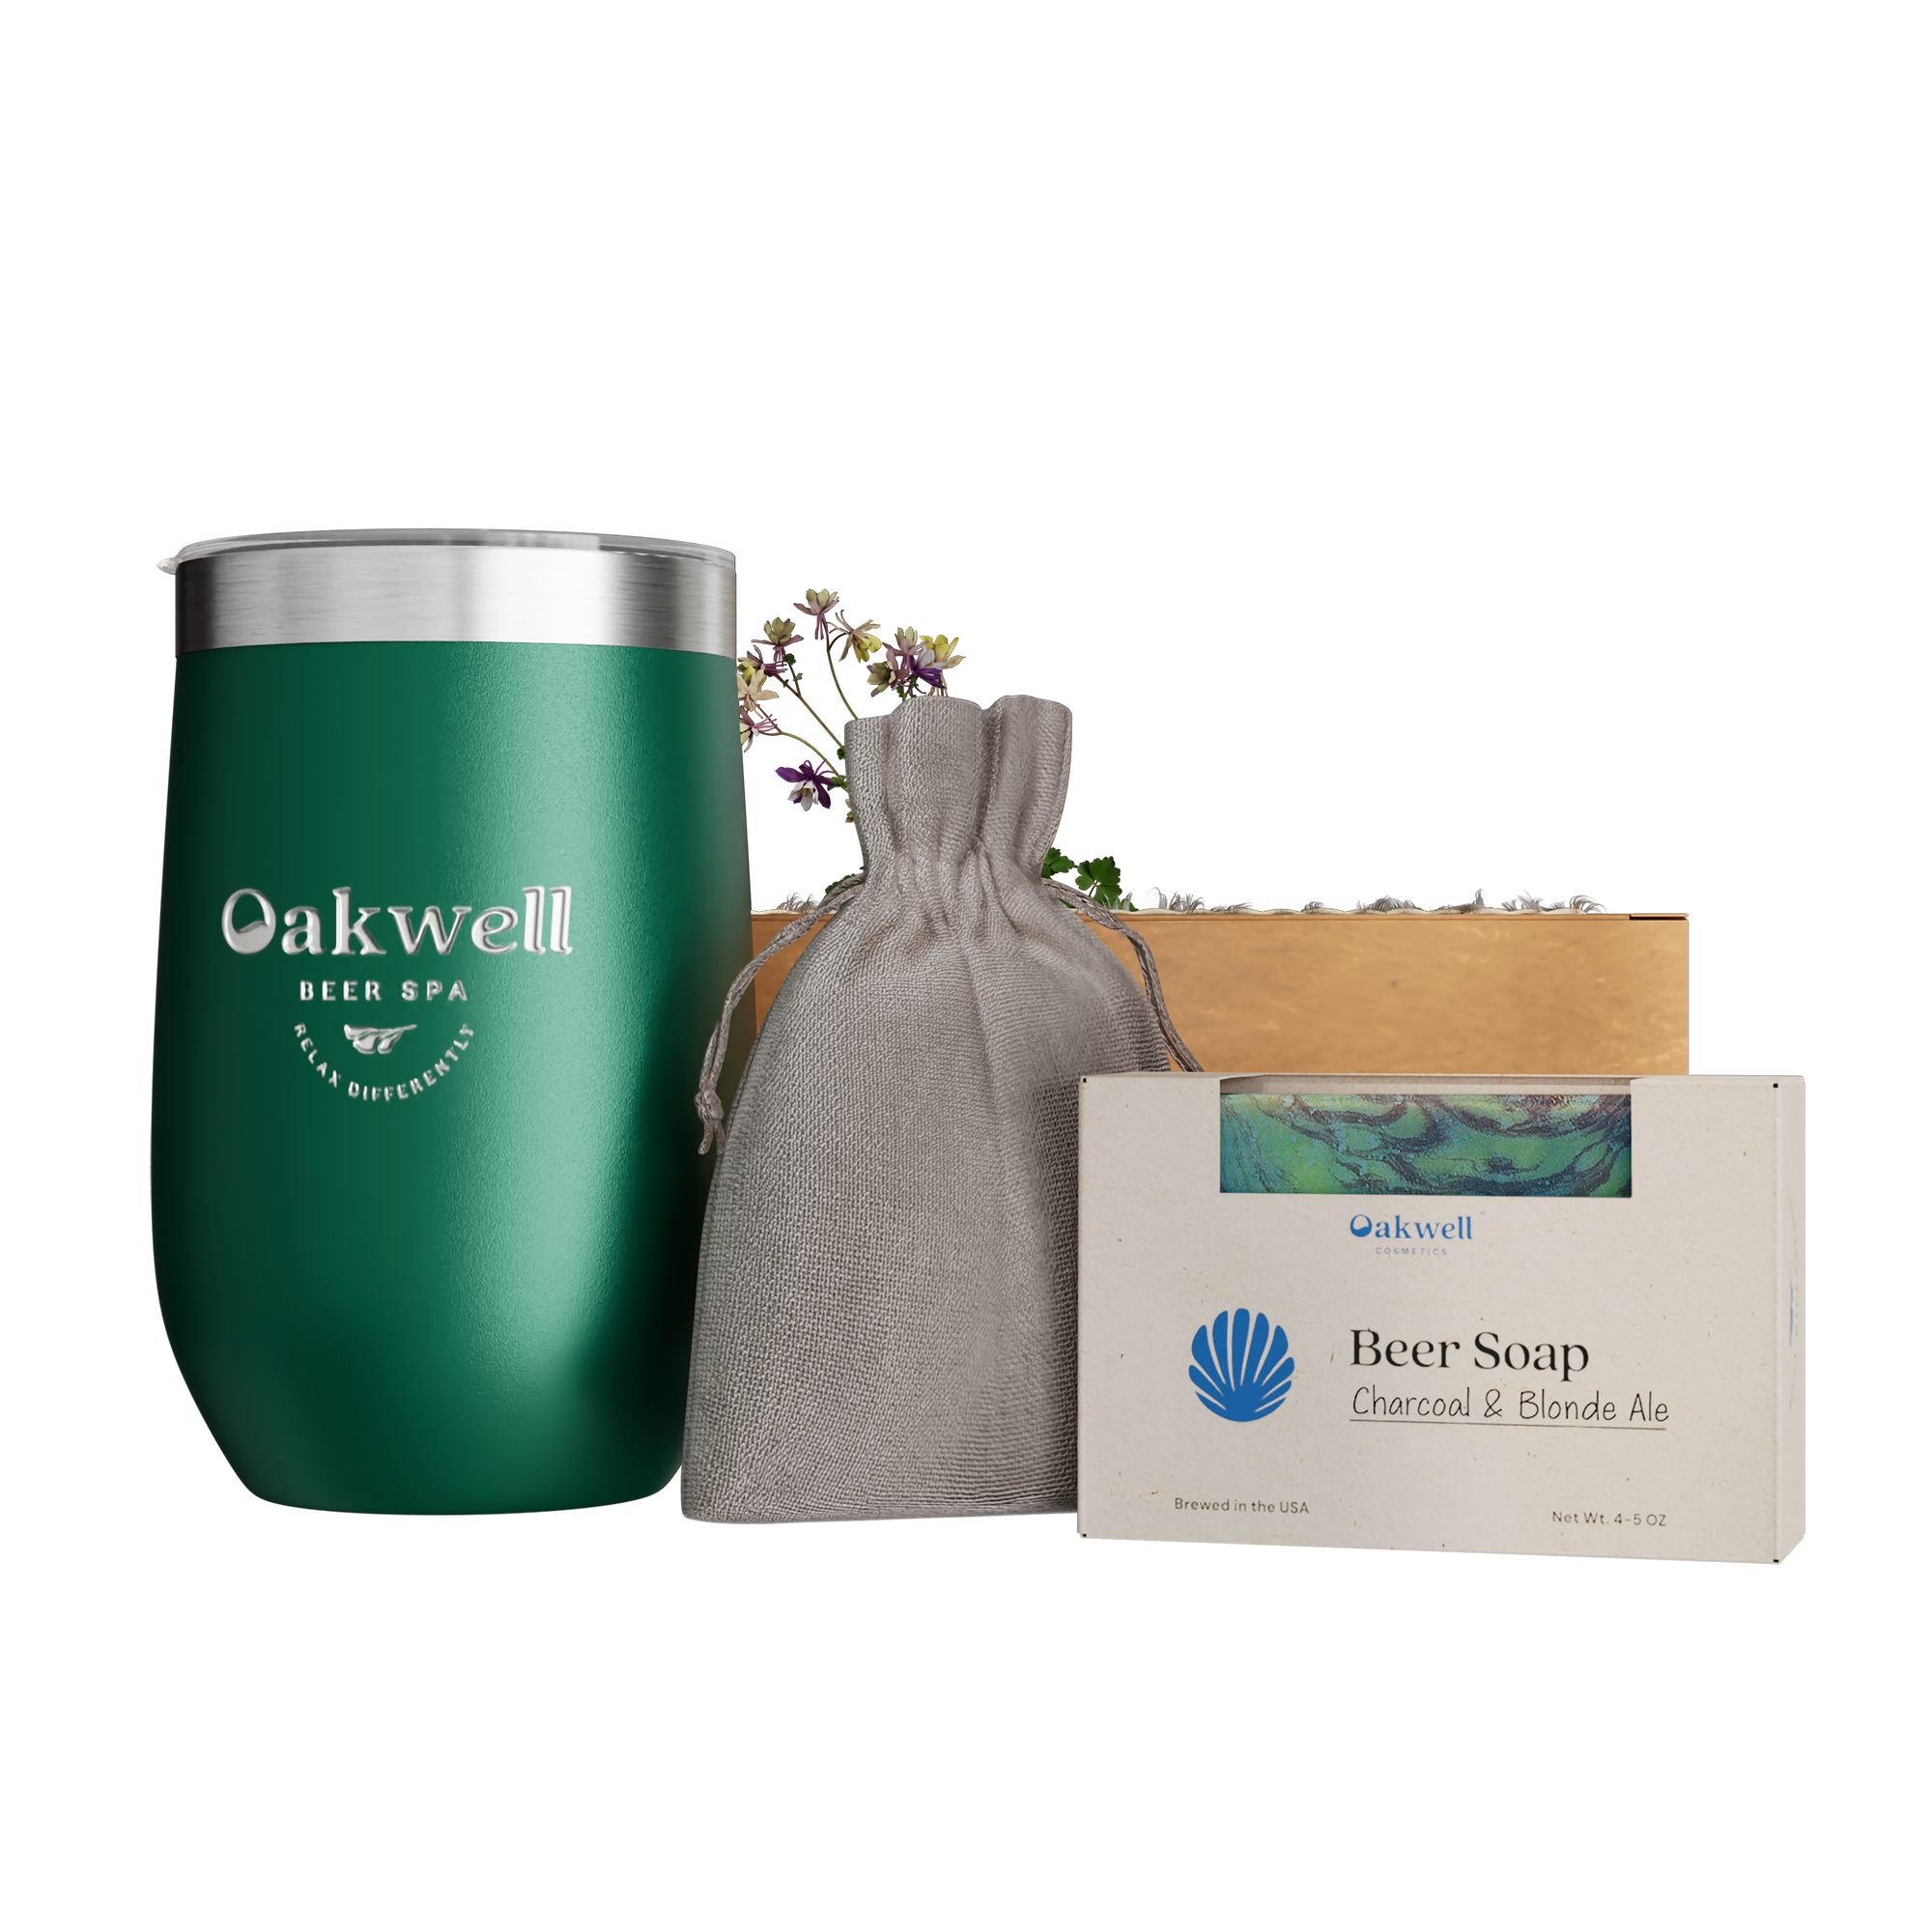 Oakwell Beer Spa gift box with stainless steel tumbler, beer soap, beer bath tea